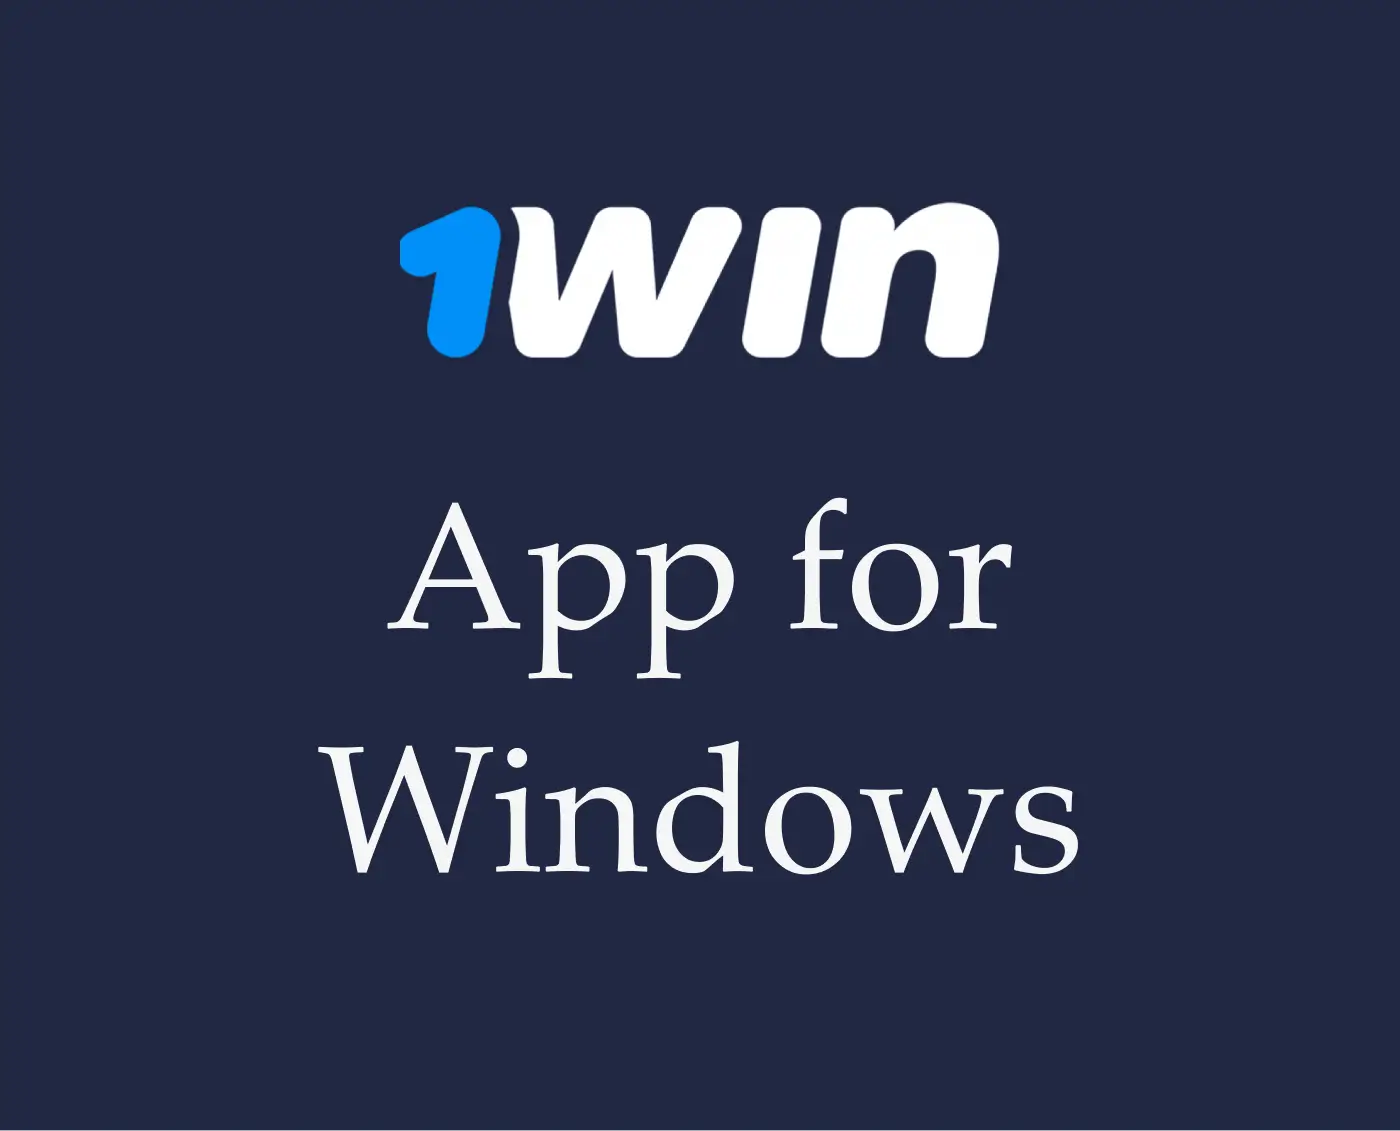 1win App for Windows